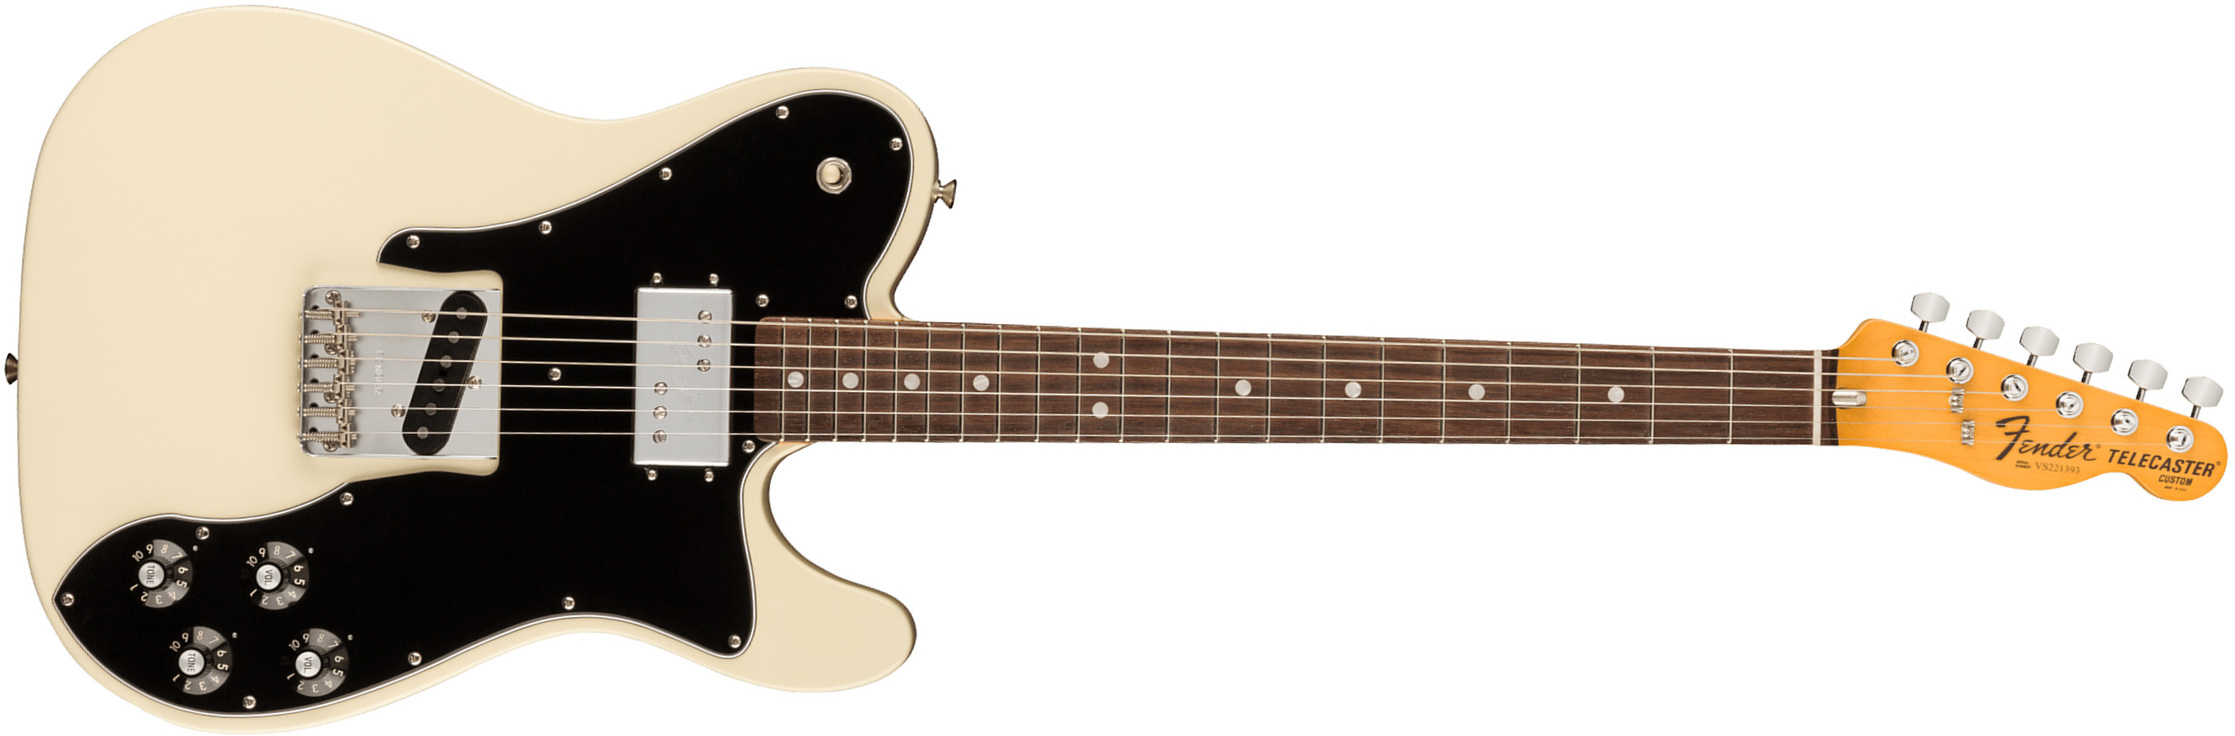 Fender Tele Custom 1977 American Vintage Ii Usa Sh Ht Rw - Olympic White - Guitarra eléctrica con forma de tel - Main picture